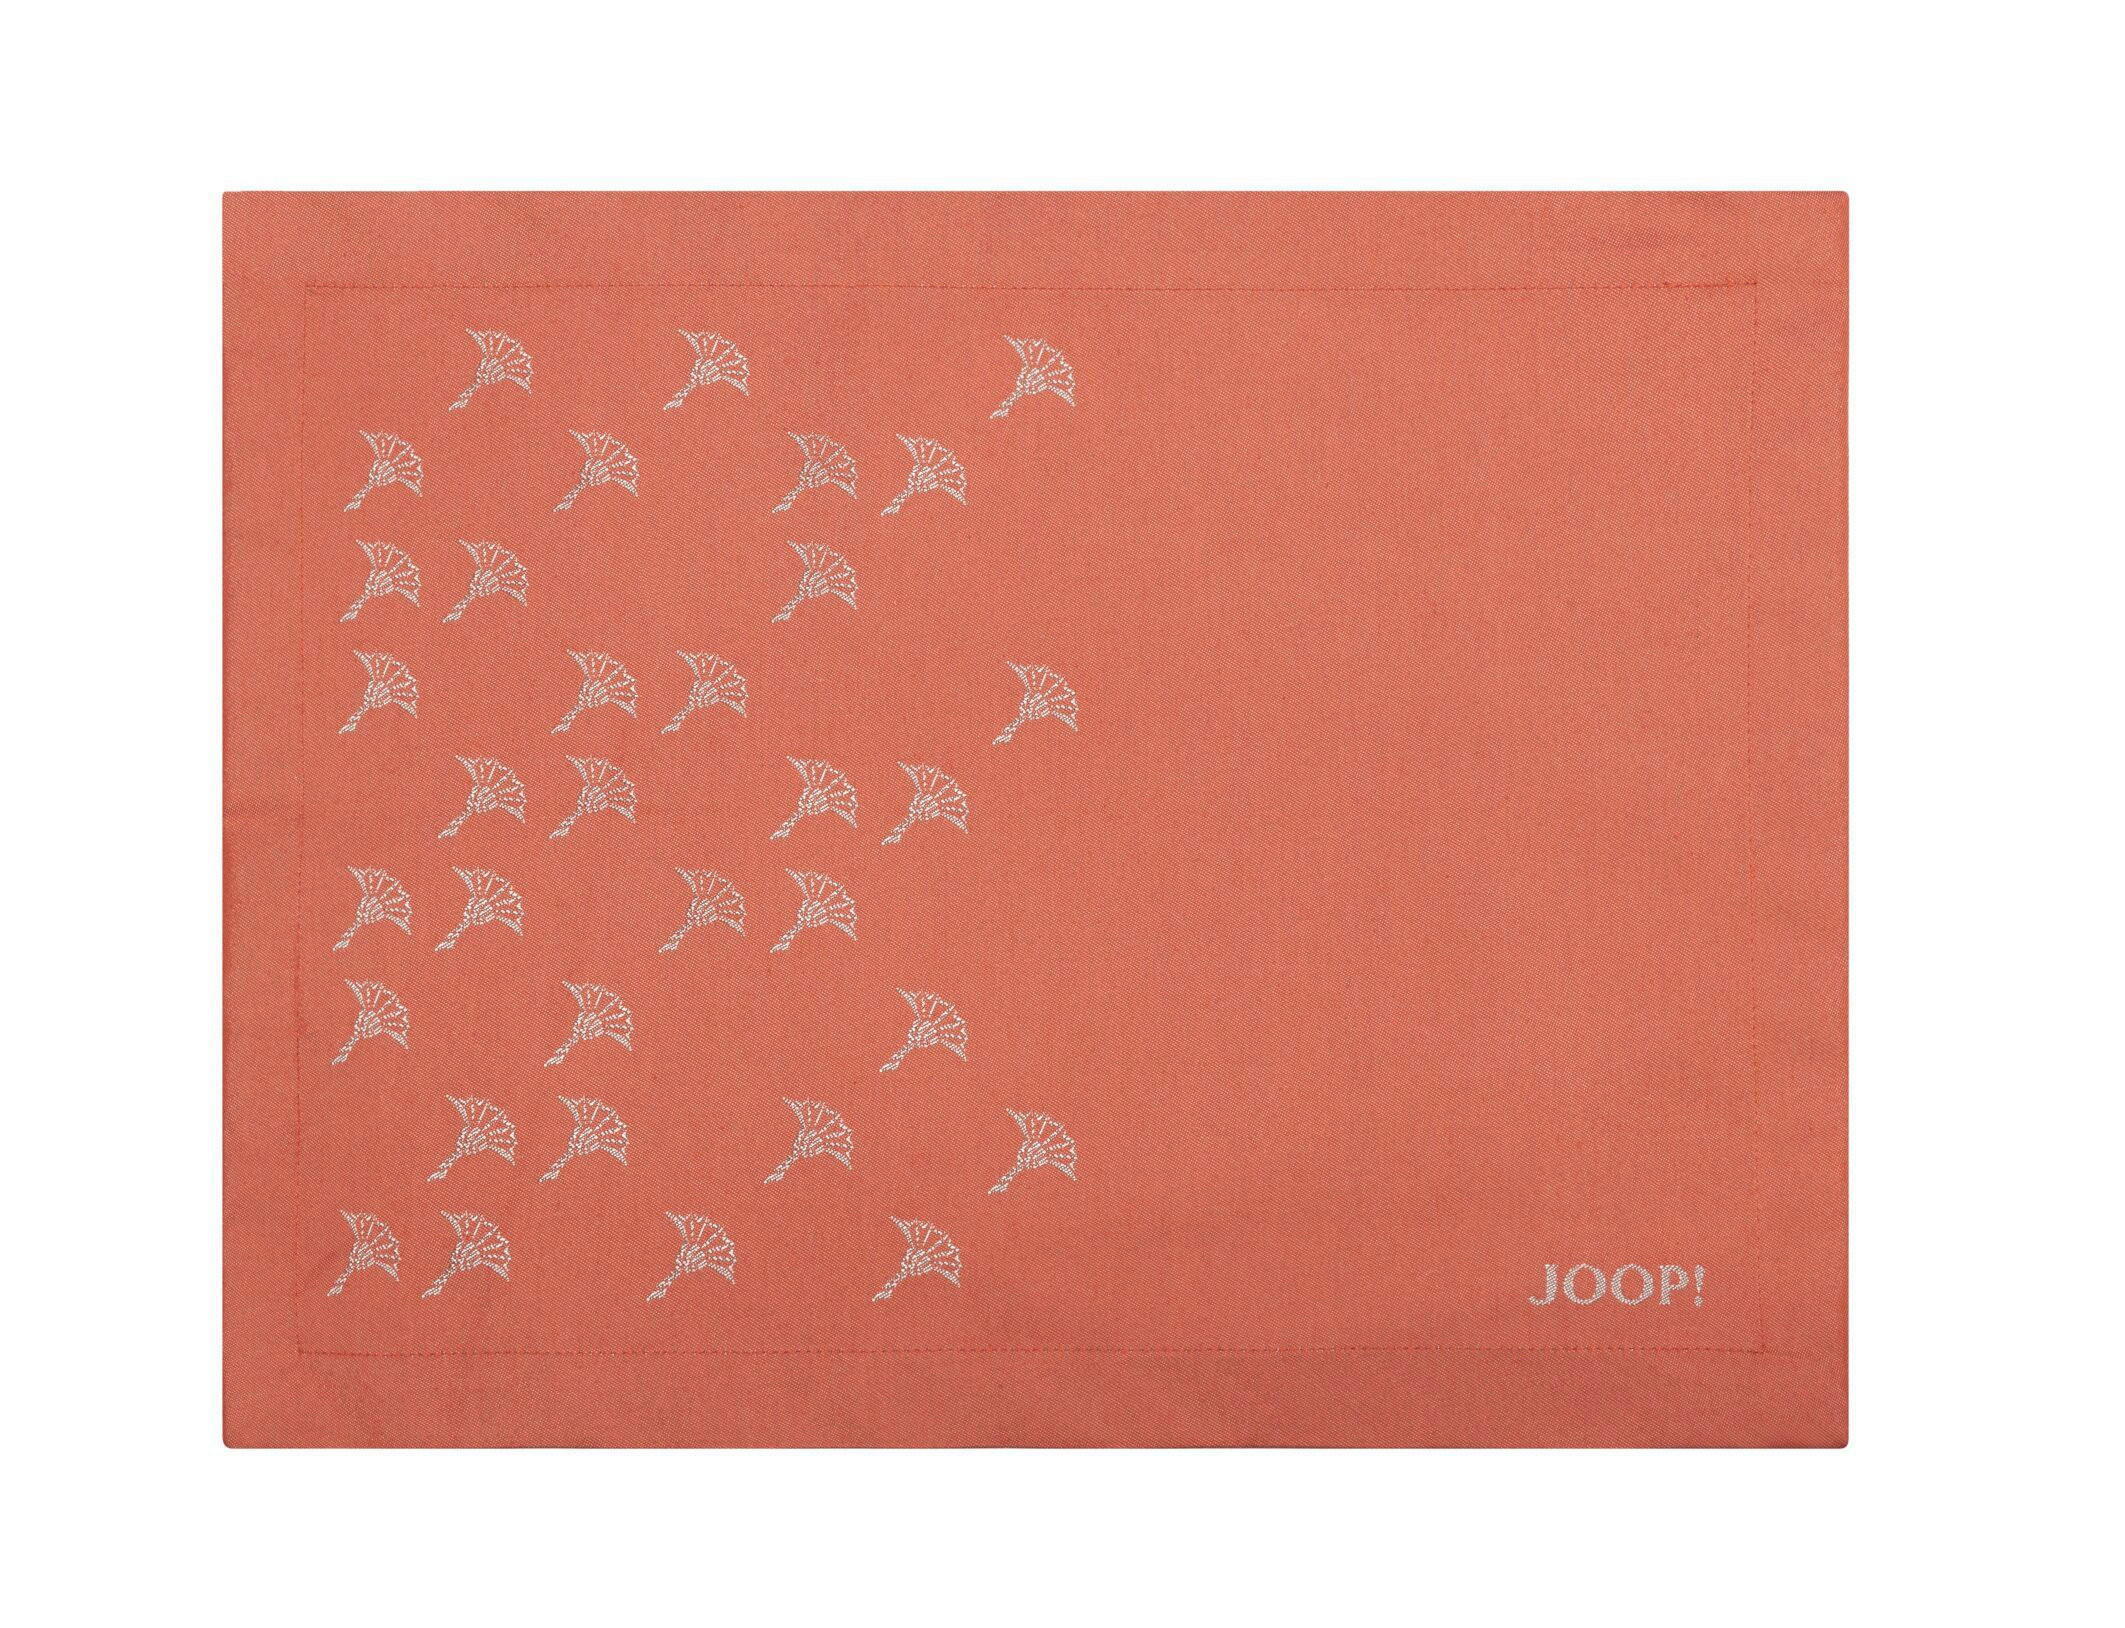 TISCHSET Textil Rostfarben  - Rostfarben, Design, Textil (36/48cm) - Joop!